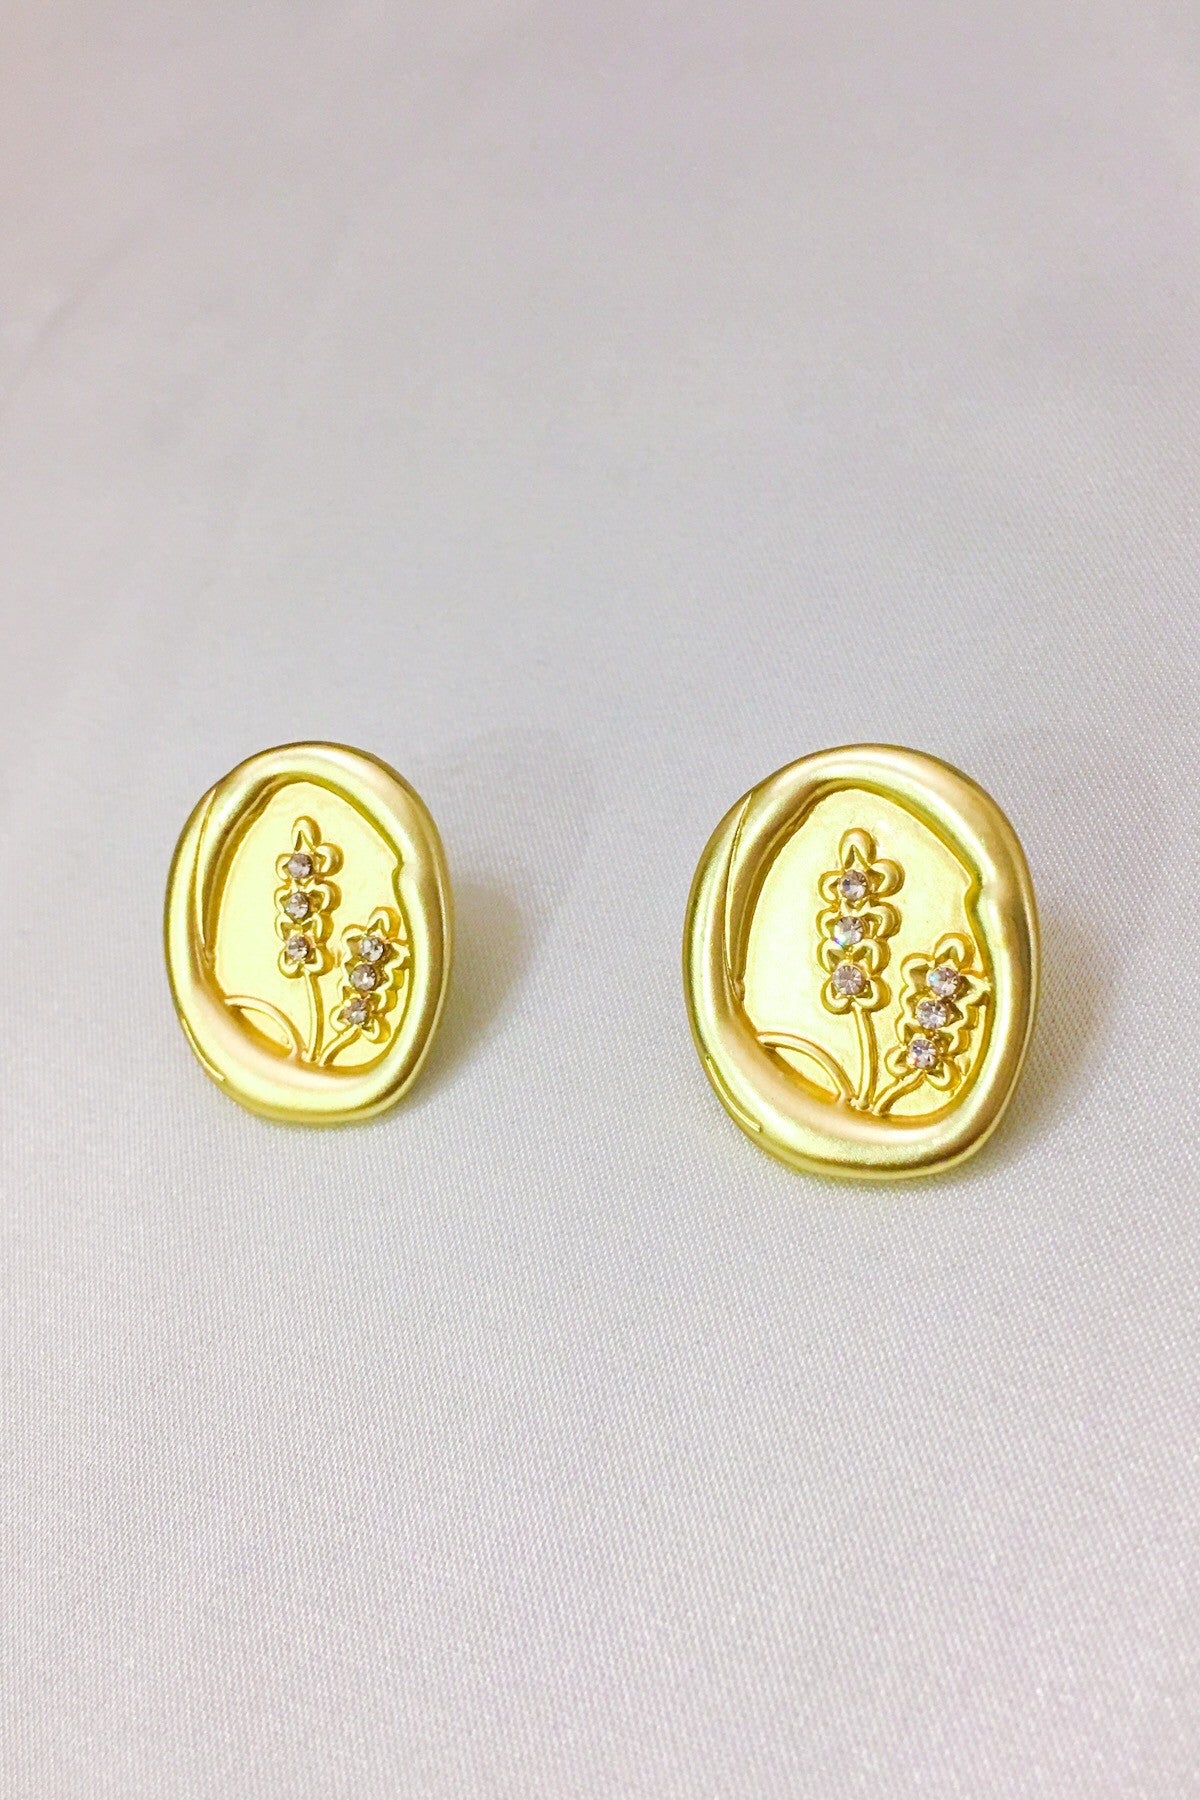 SKYE San Francisco SF California shop ethical sustainable modern minimalist quality women jewelry Maribel 18K Gold Earrings Coin 3